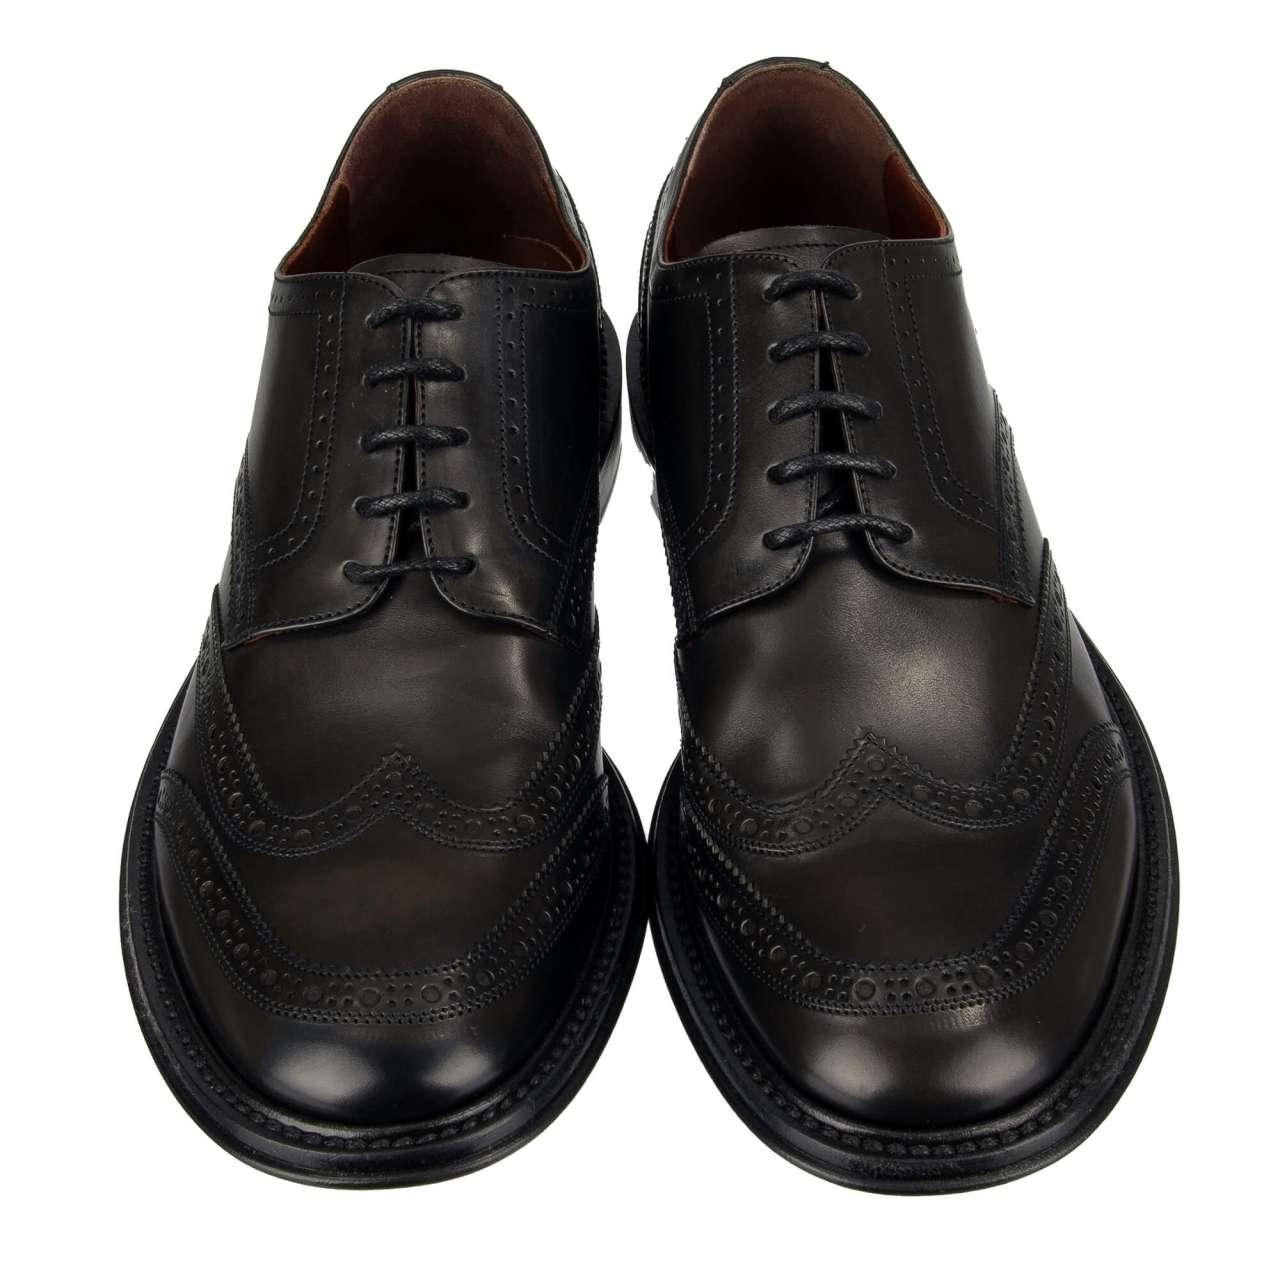 Dolce & Gabbana - DG Logo Formal Calf Leather Derby Shoes MARSALA Black EUR 39 In Excellent Condition For Sale In Erkrath, DE